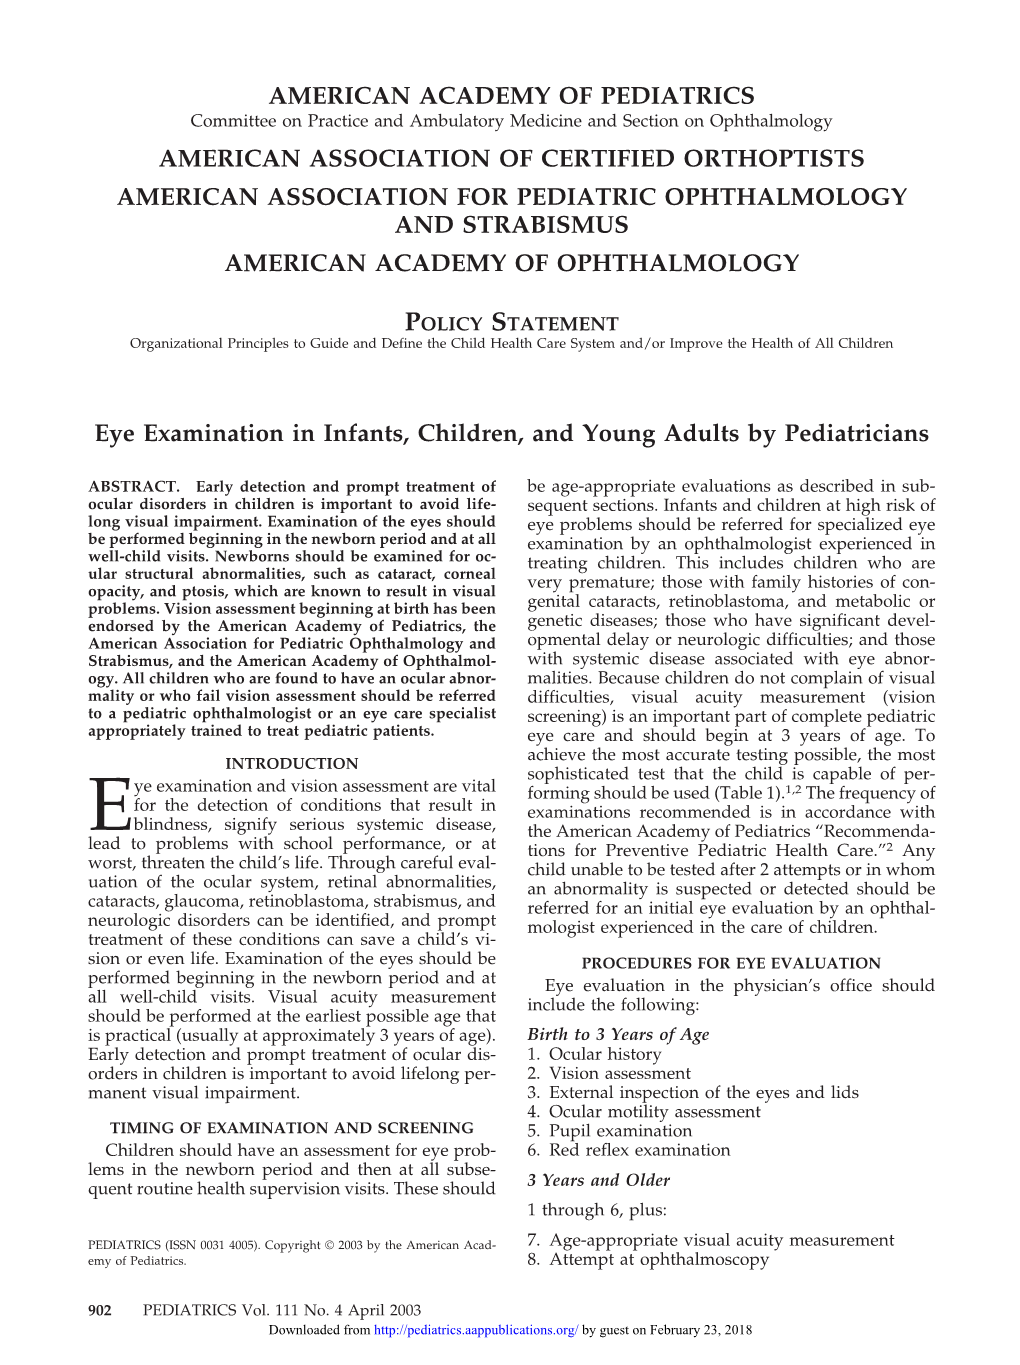 American Academy of Pediatrics Policy Statement